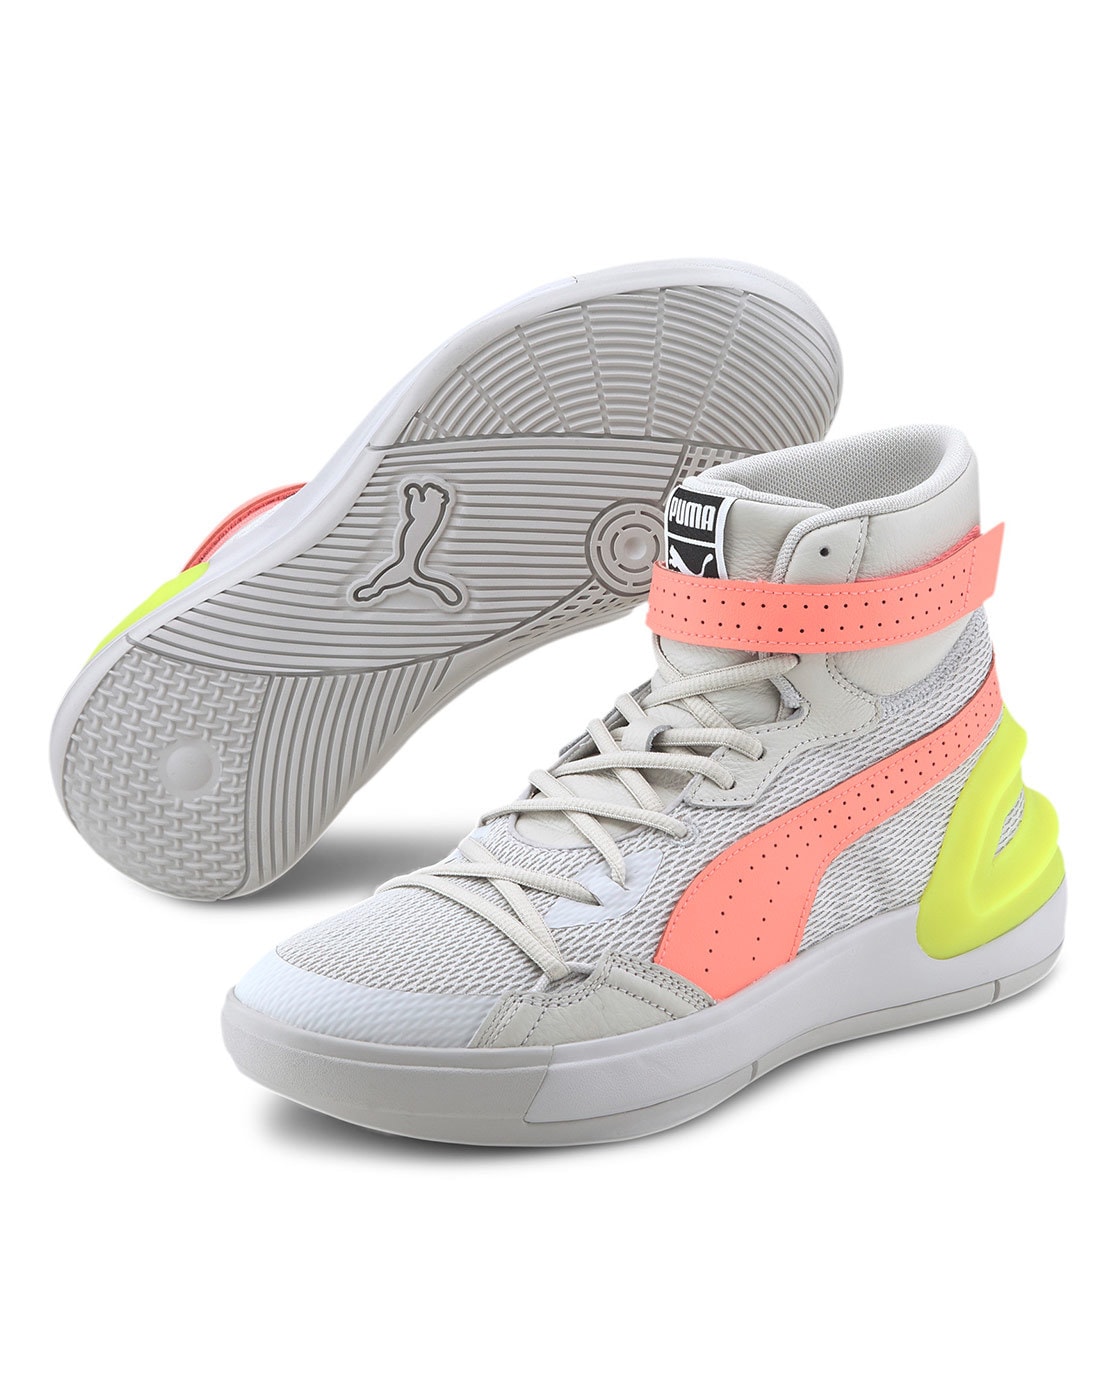 puma basketball shoes online